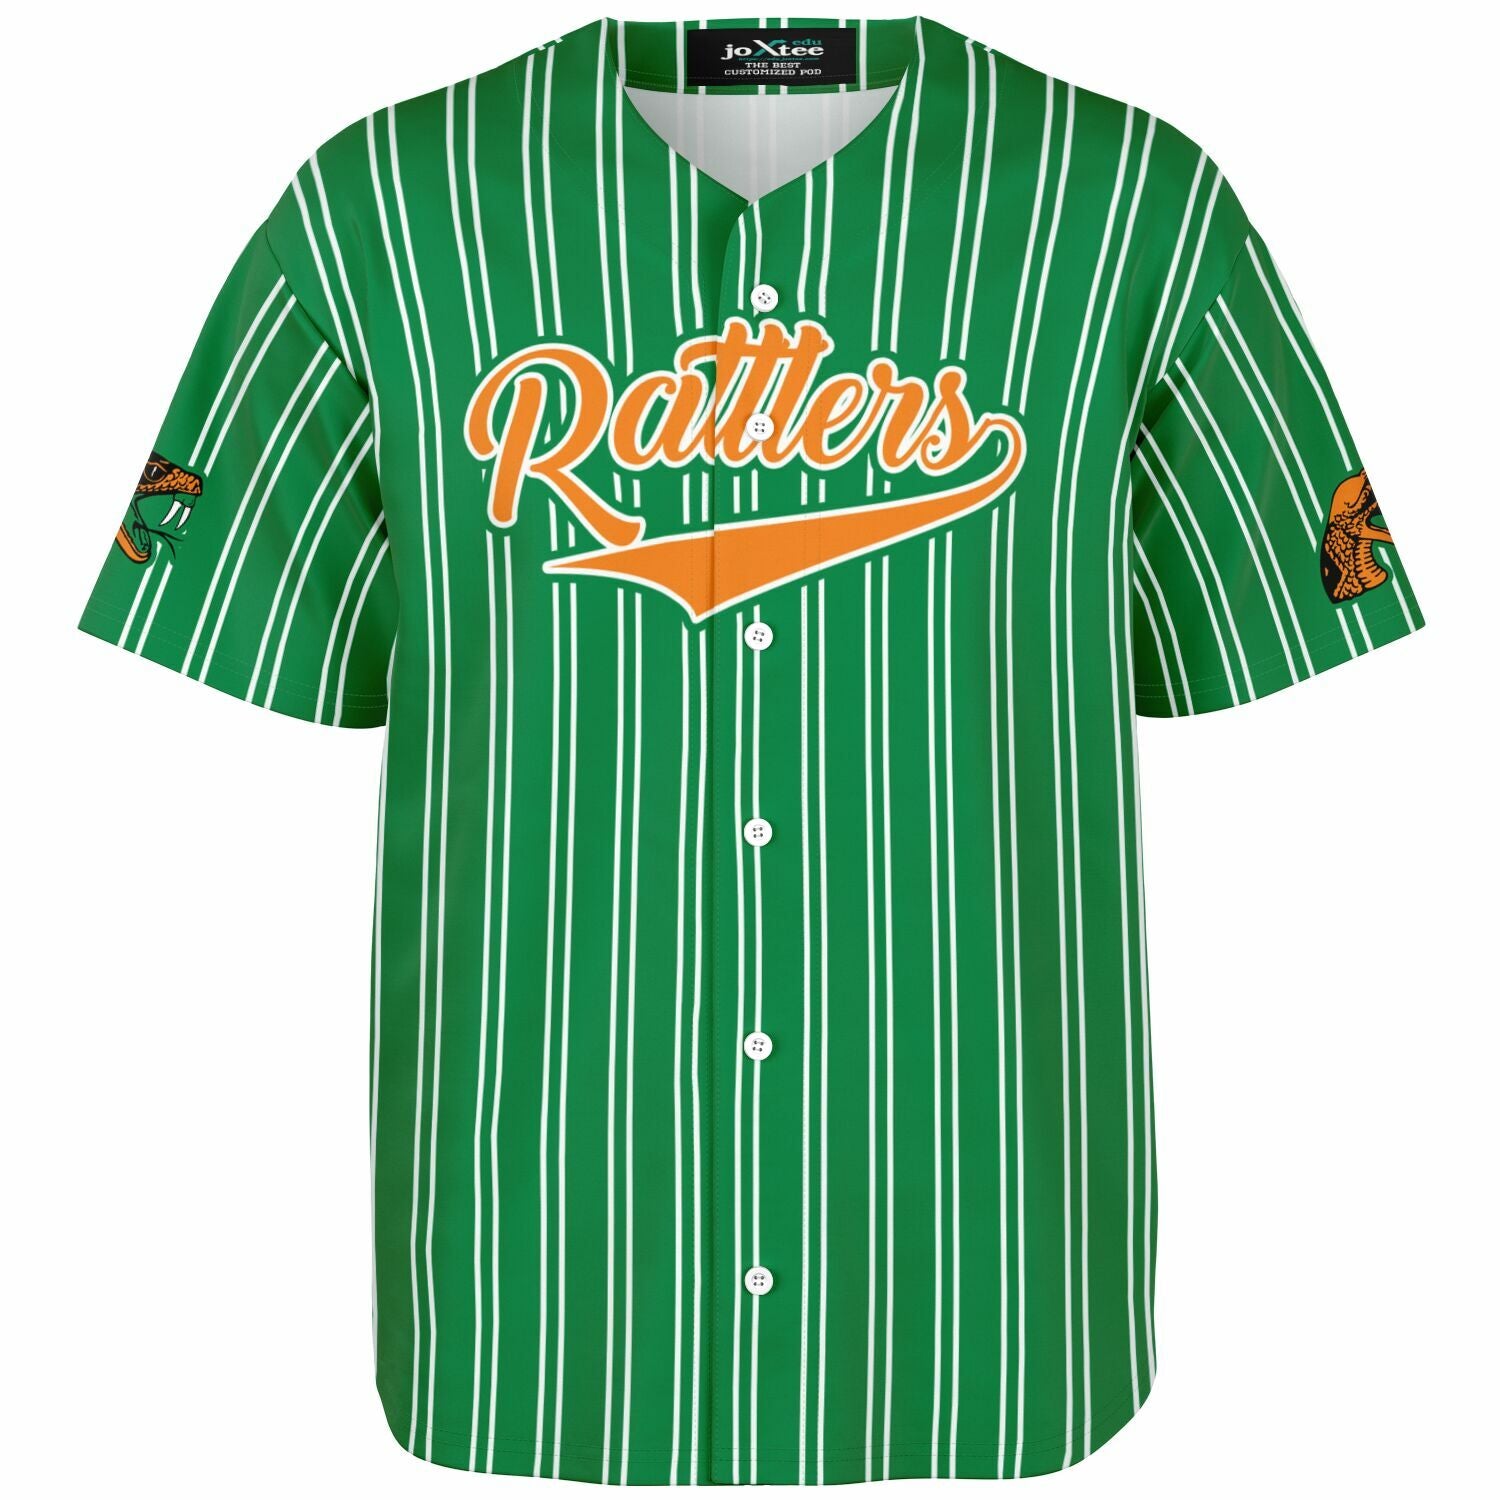 buy custom jersey online - buy baseball jersey online